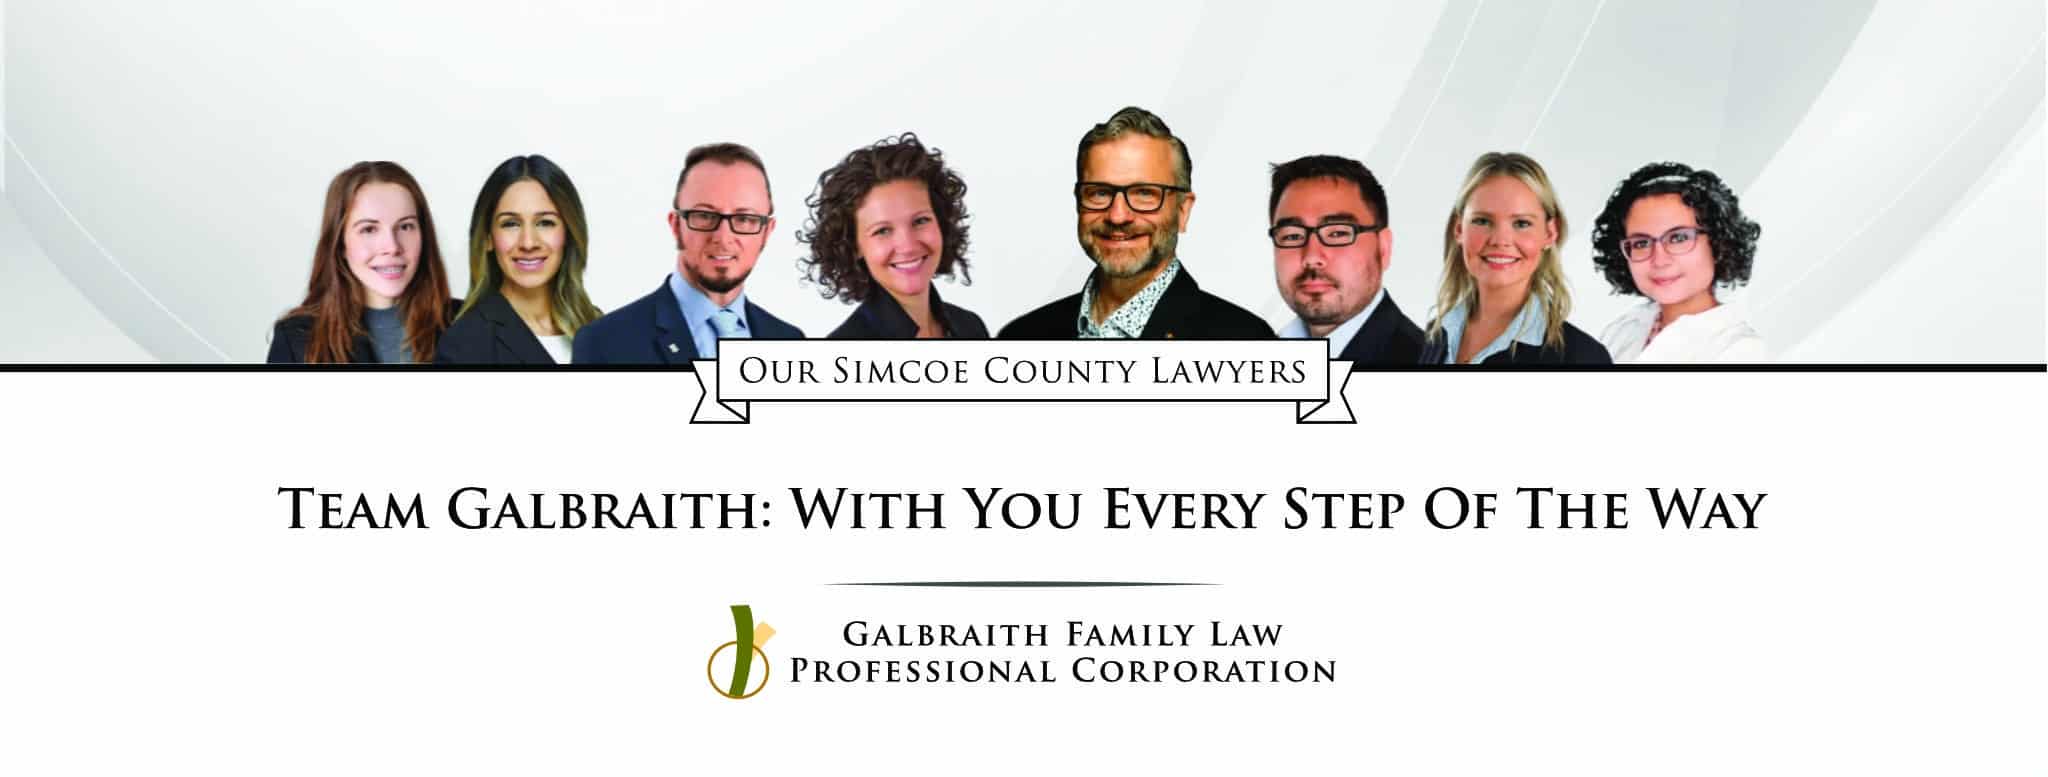 TeamGalbraith_Simcoe_county-lawyers-2024-02